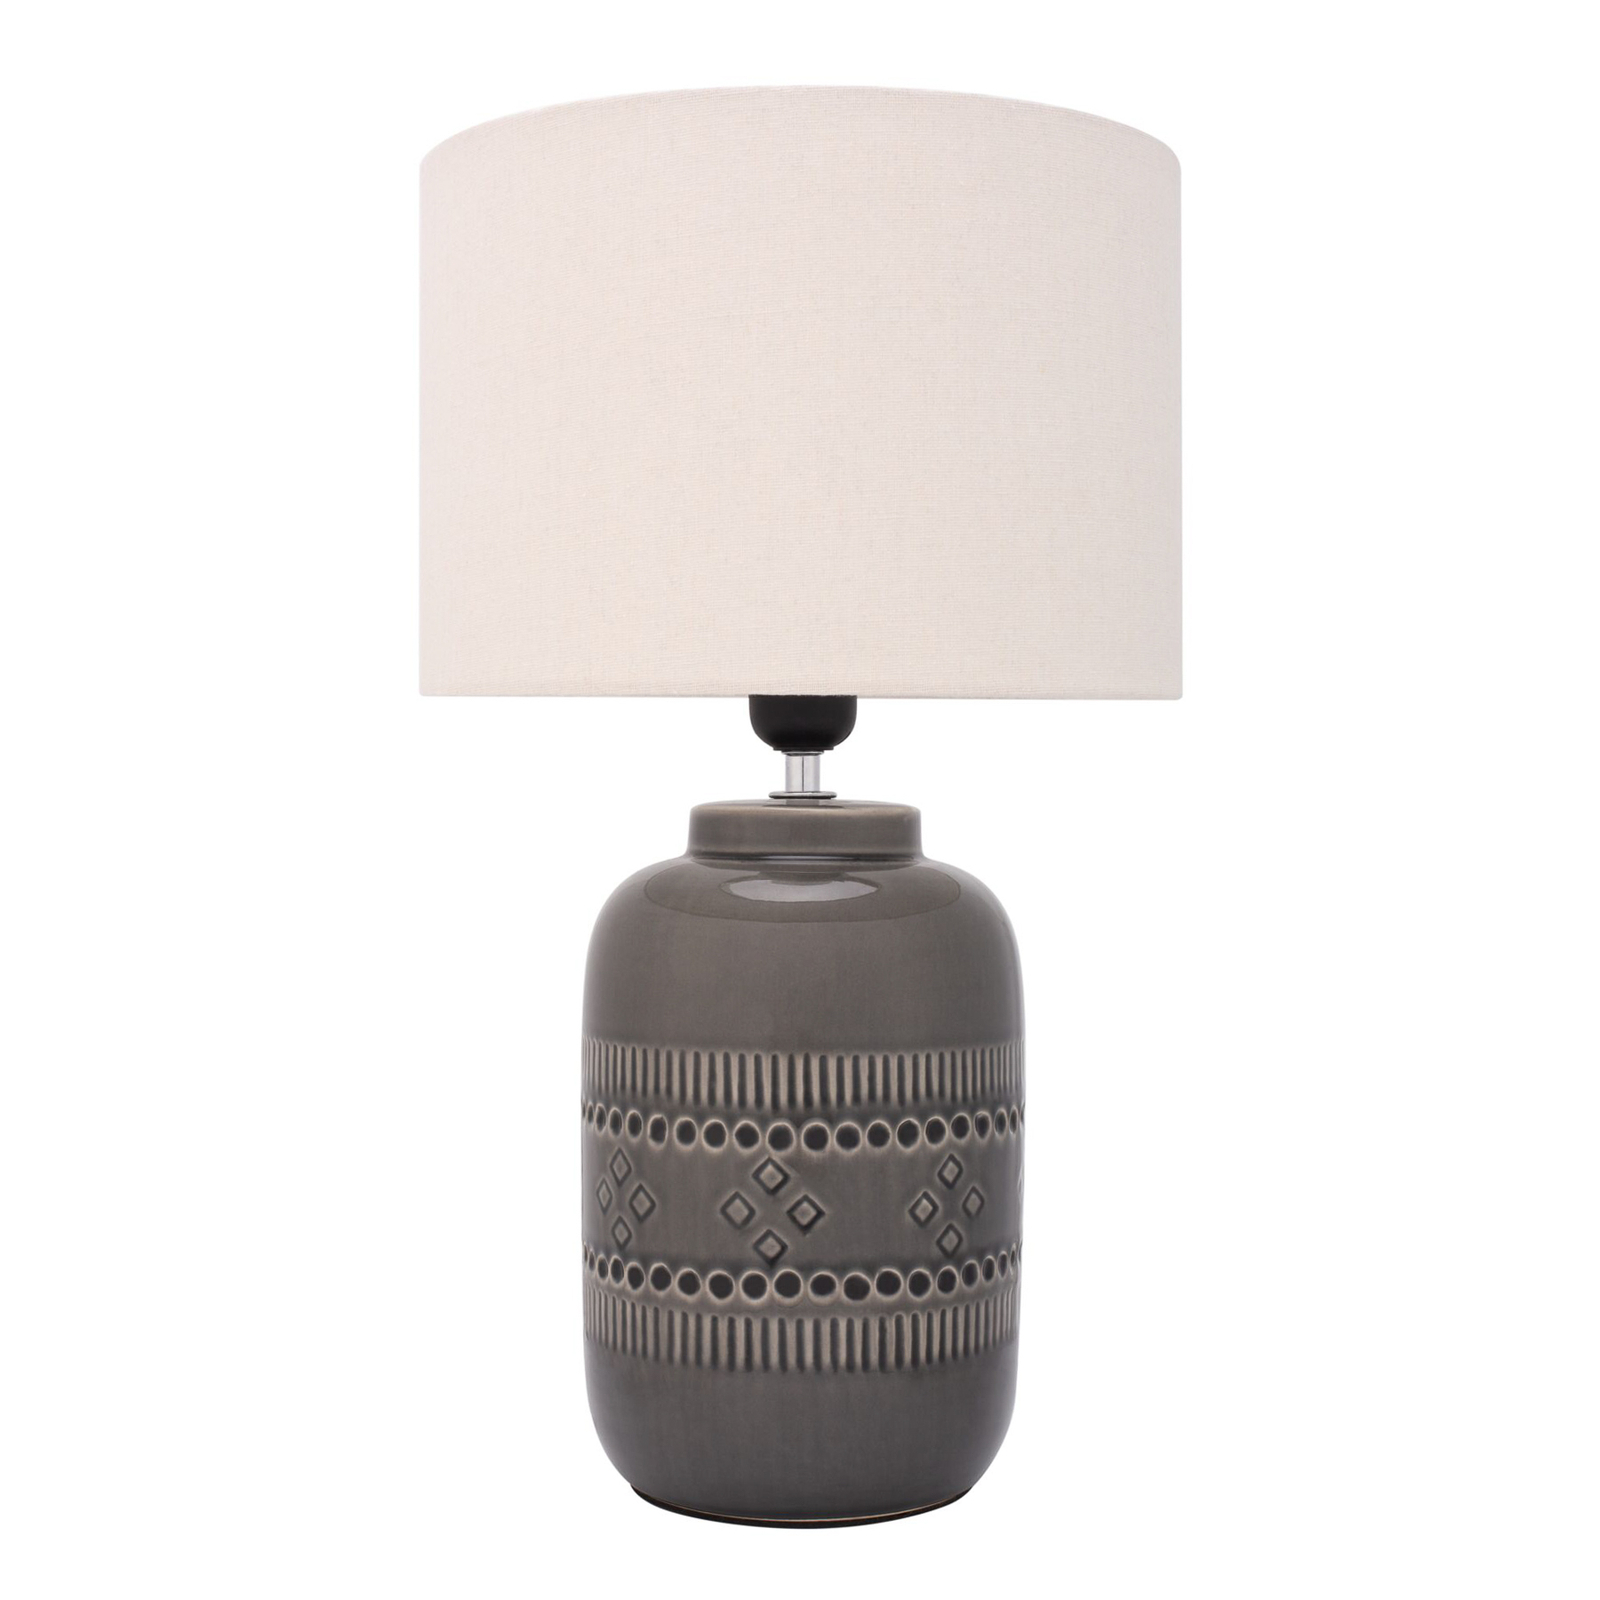 Pauleen Gleaming Beauty table lamp, ceramic base